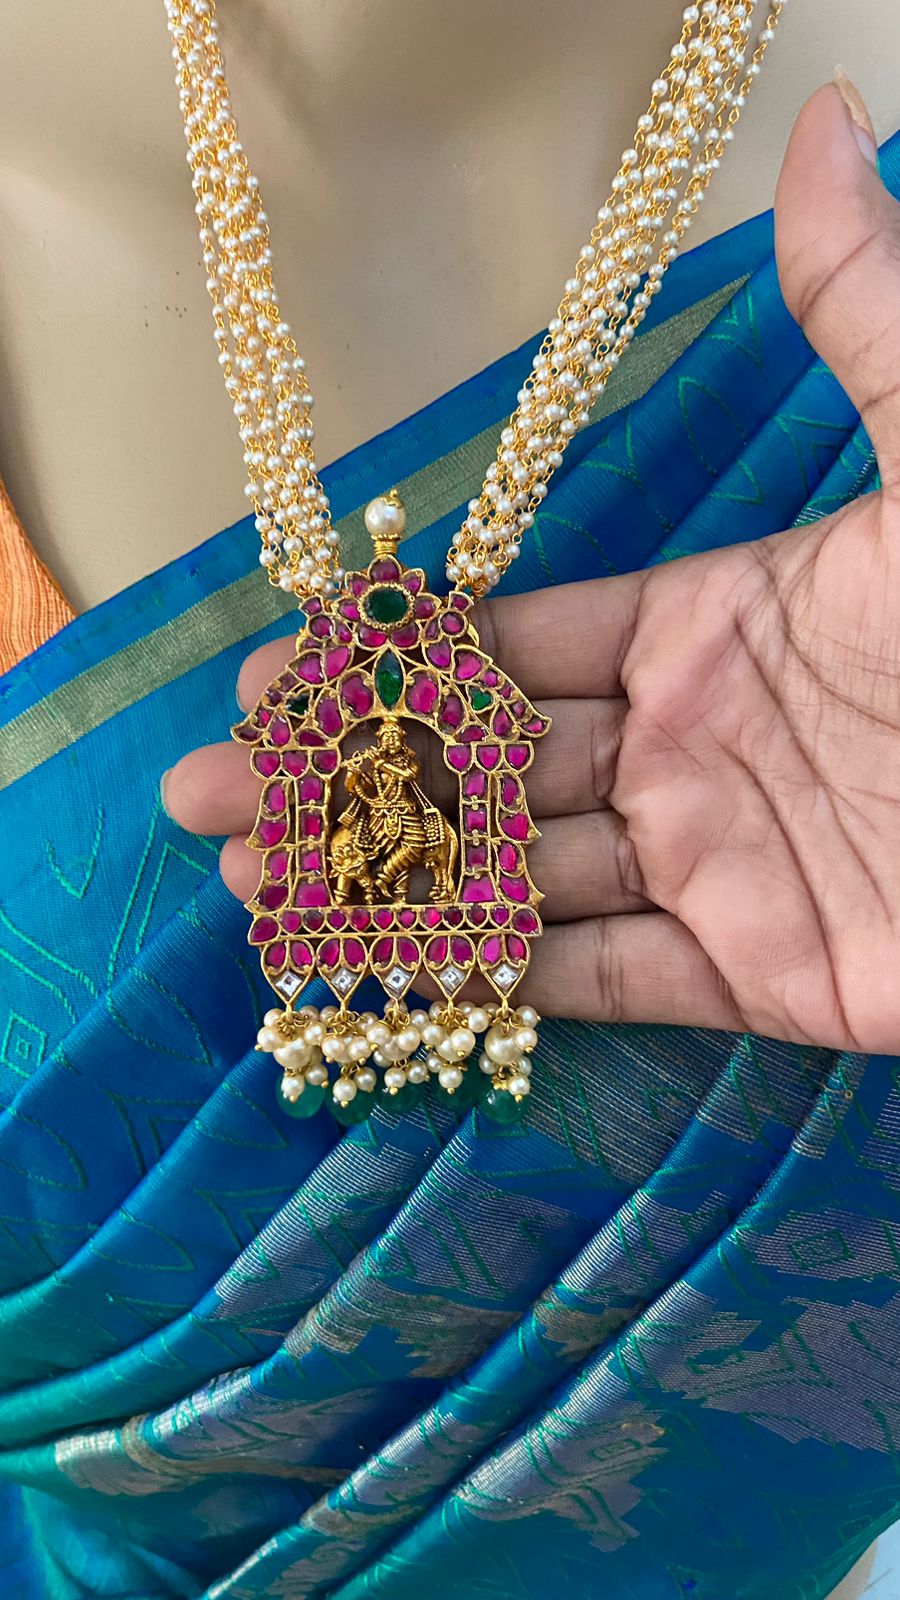 Krishna Pendant Pearl Mala ( 2 Varient Available) - N1415